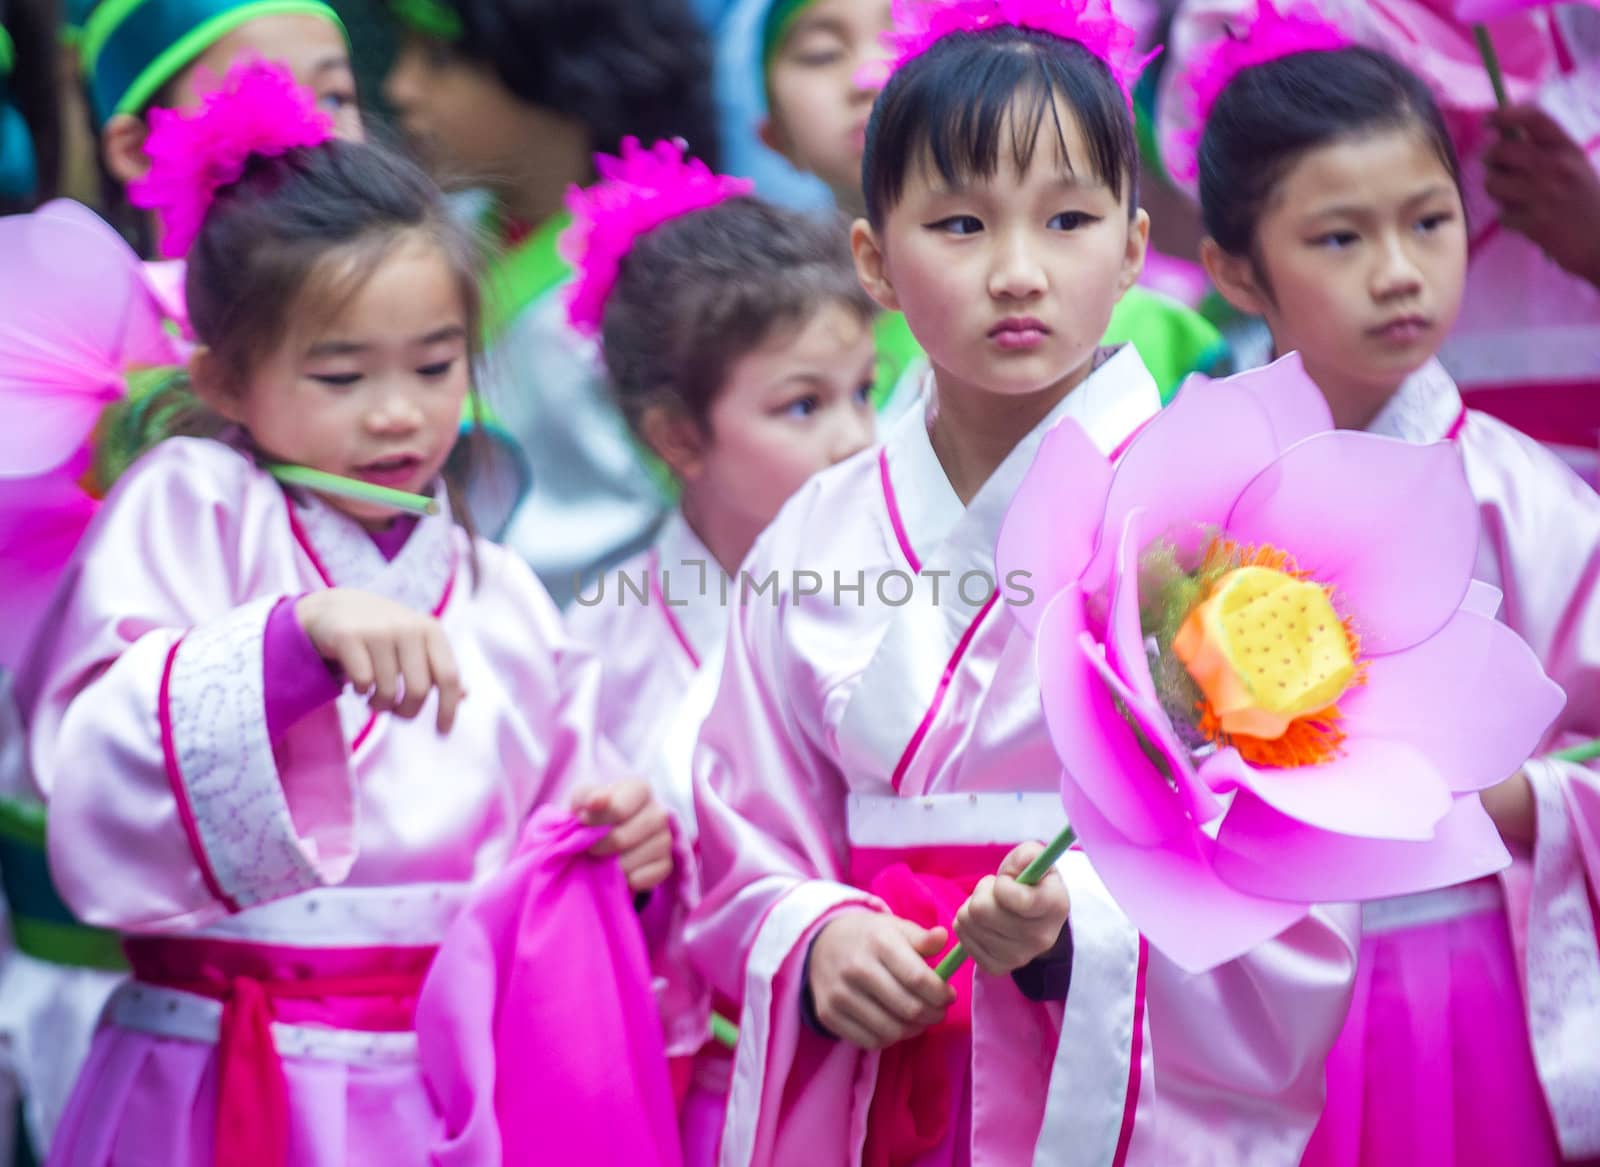 Chinese new year parade by kobby_dagan